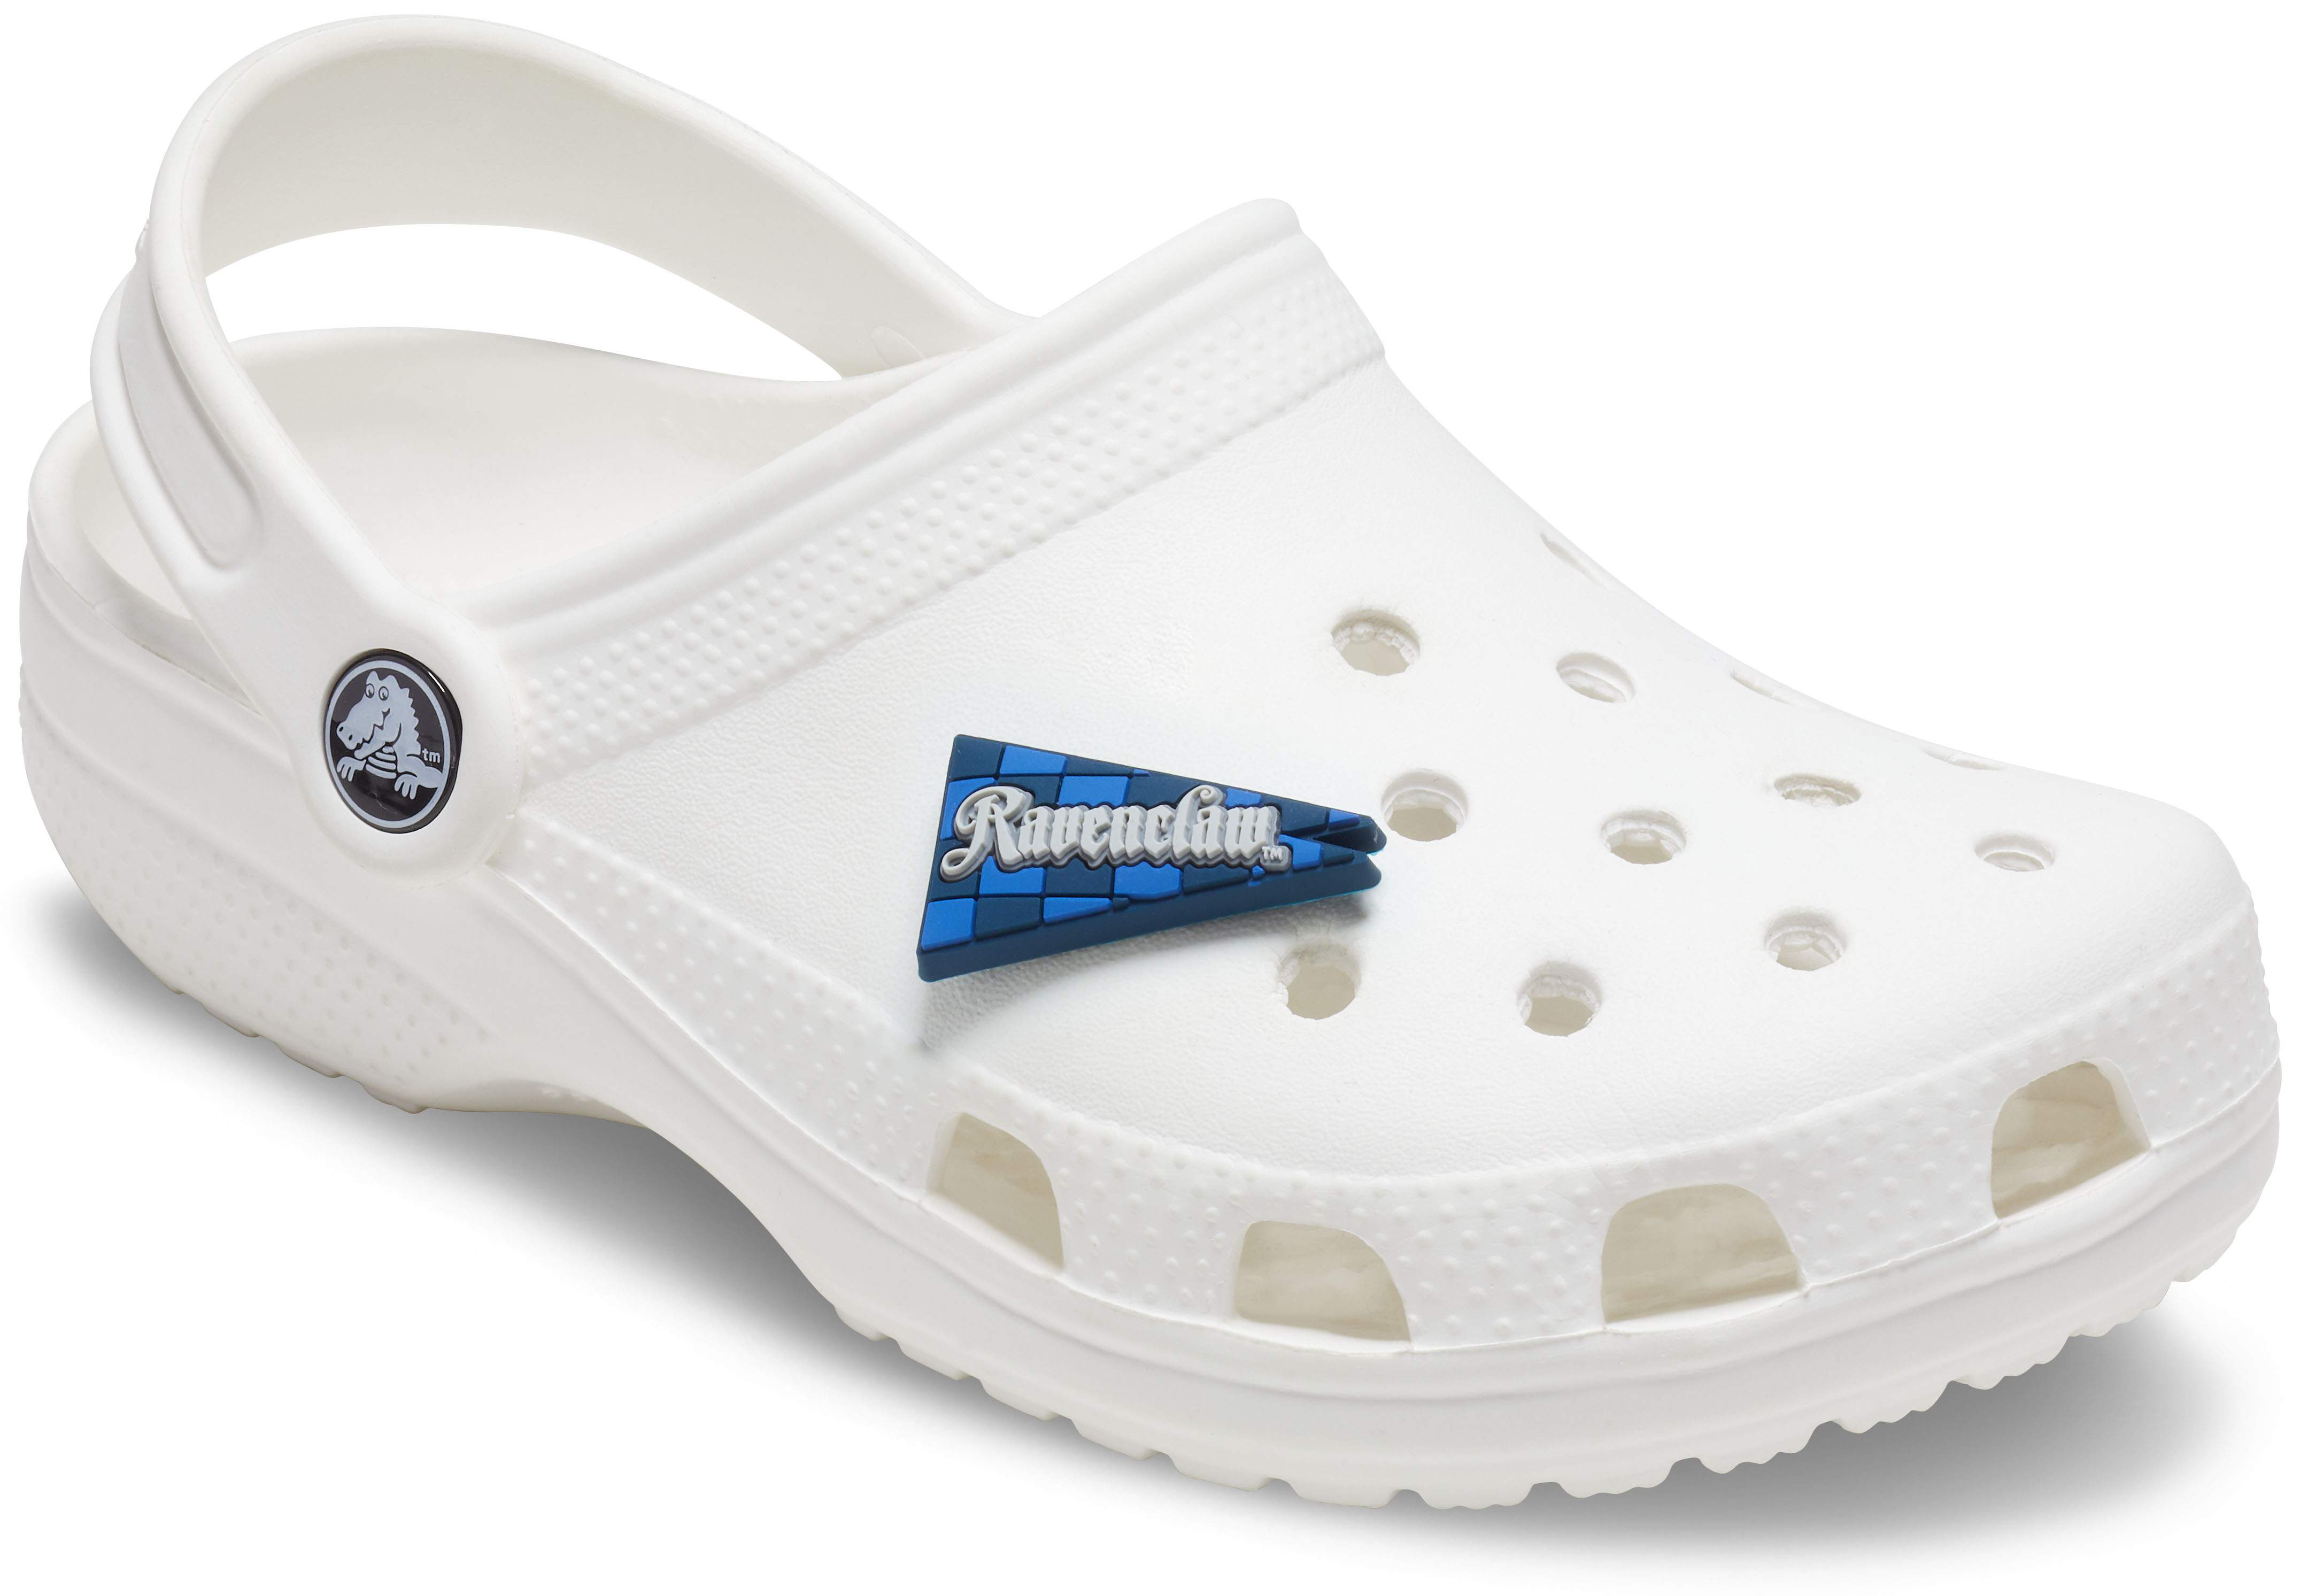 crocs as house shoes